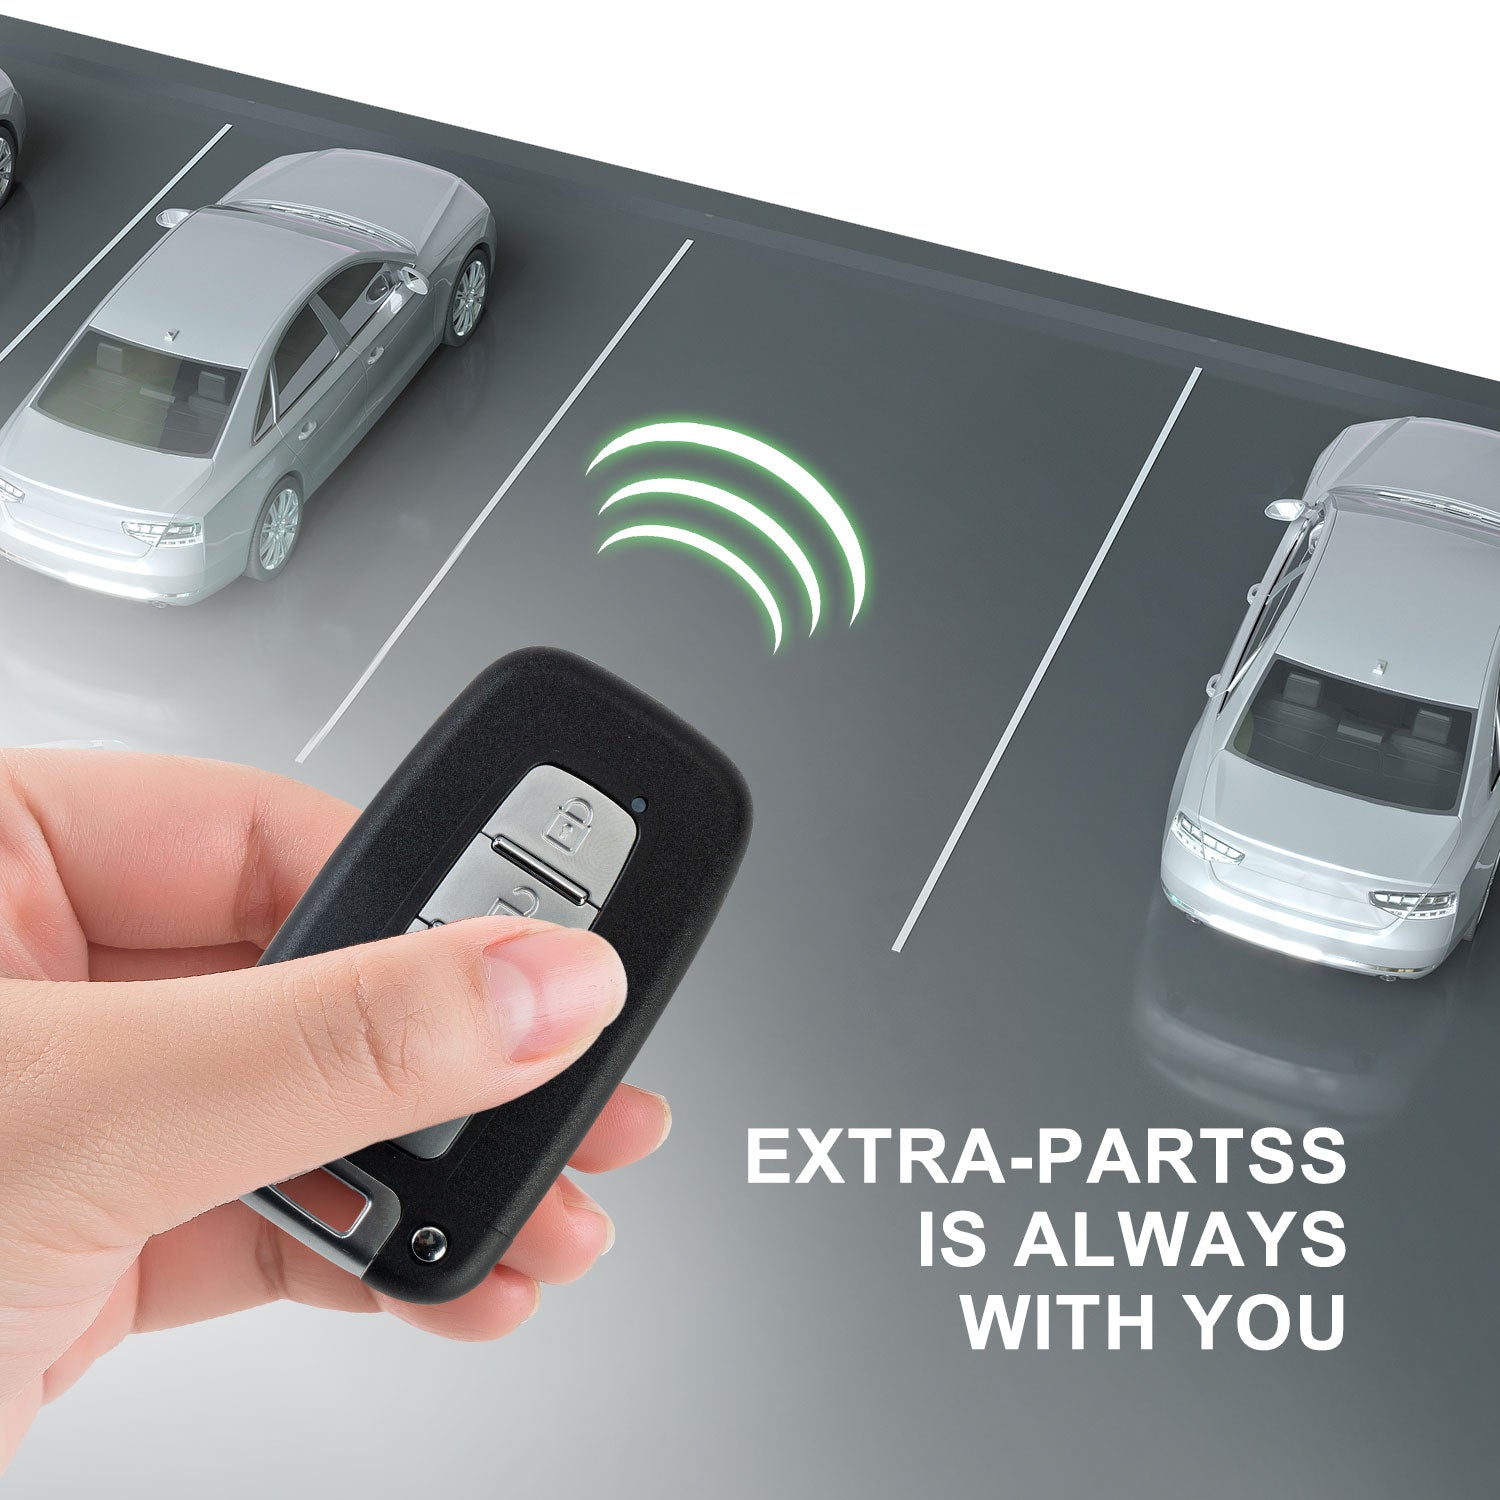 Extra-Partss Remote Car Key Fob Replacement for Hyundai SY5HMFNA04 fits 2011 2012 2013 Sonata